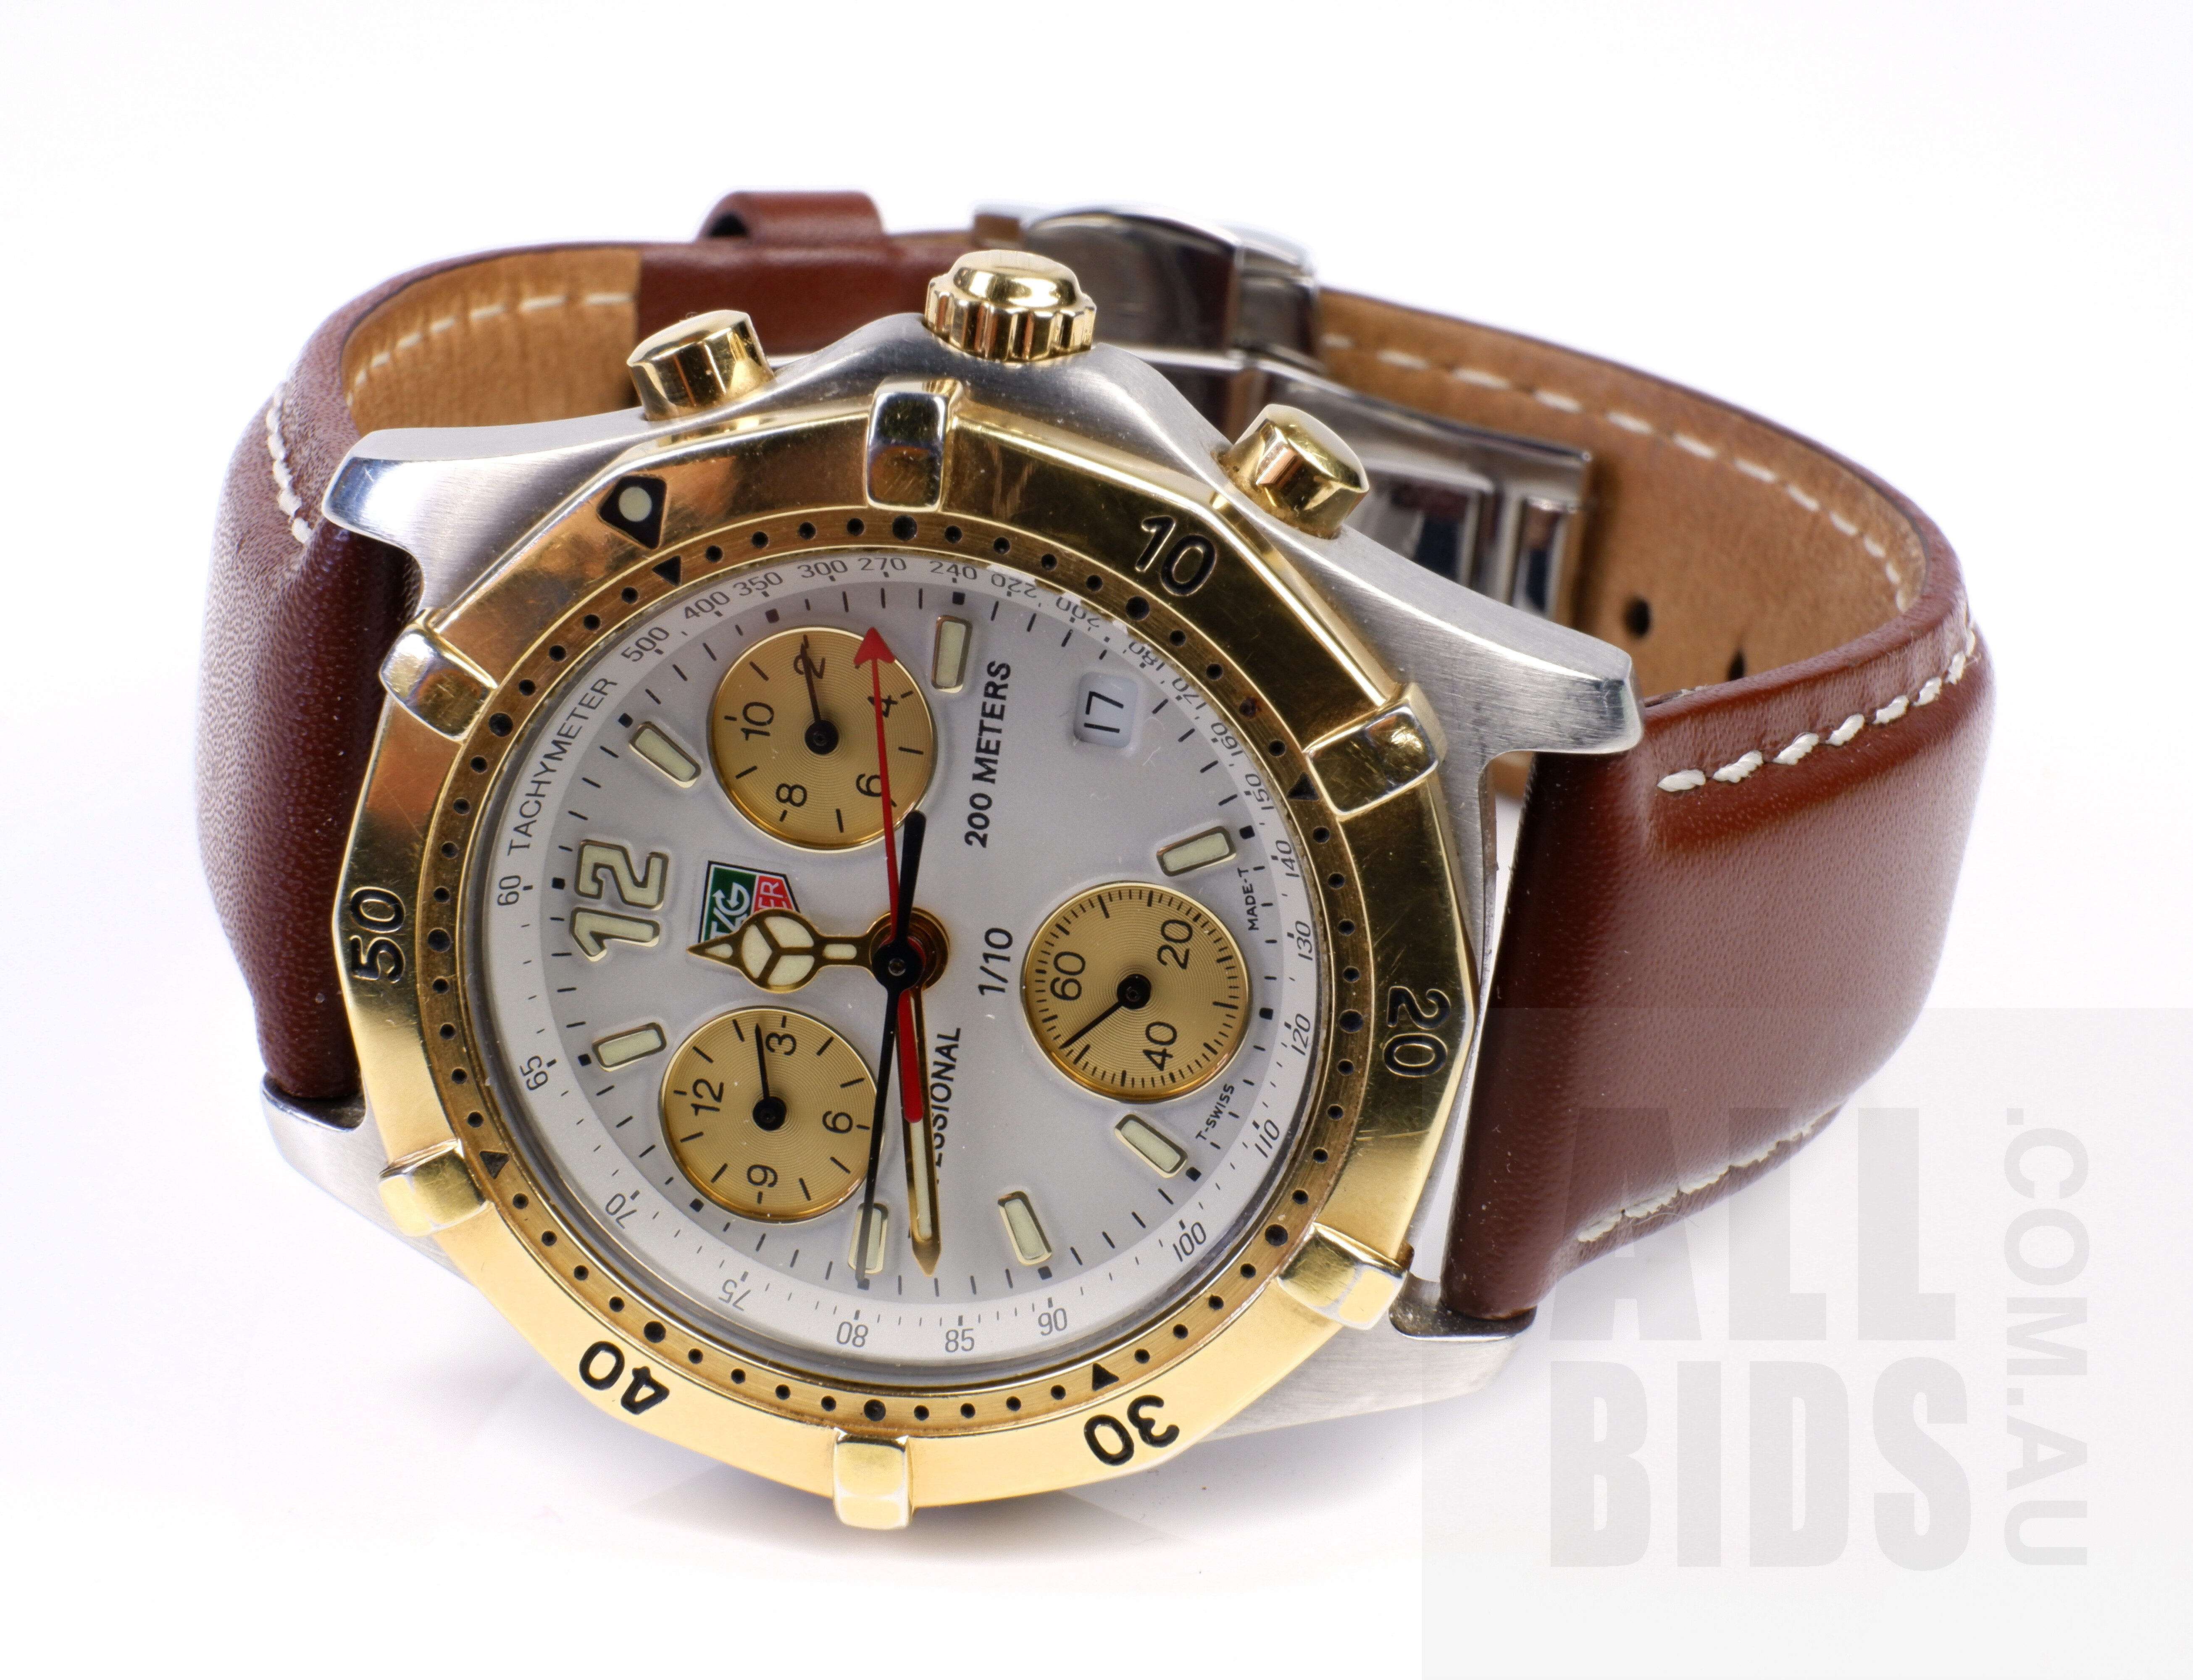 'Gents Tag Heuer Professional Chronograph Wrist Watch, Model CK1121'